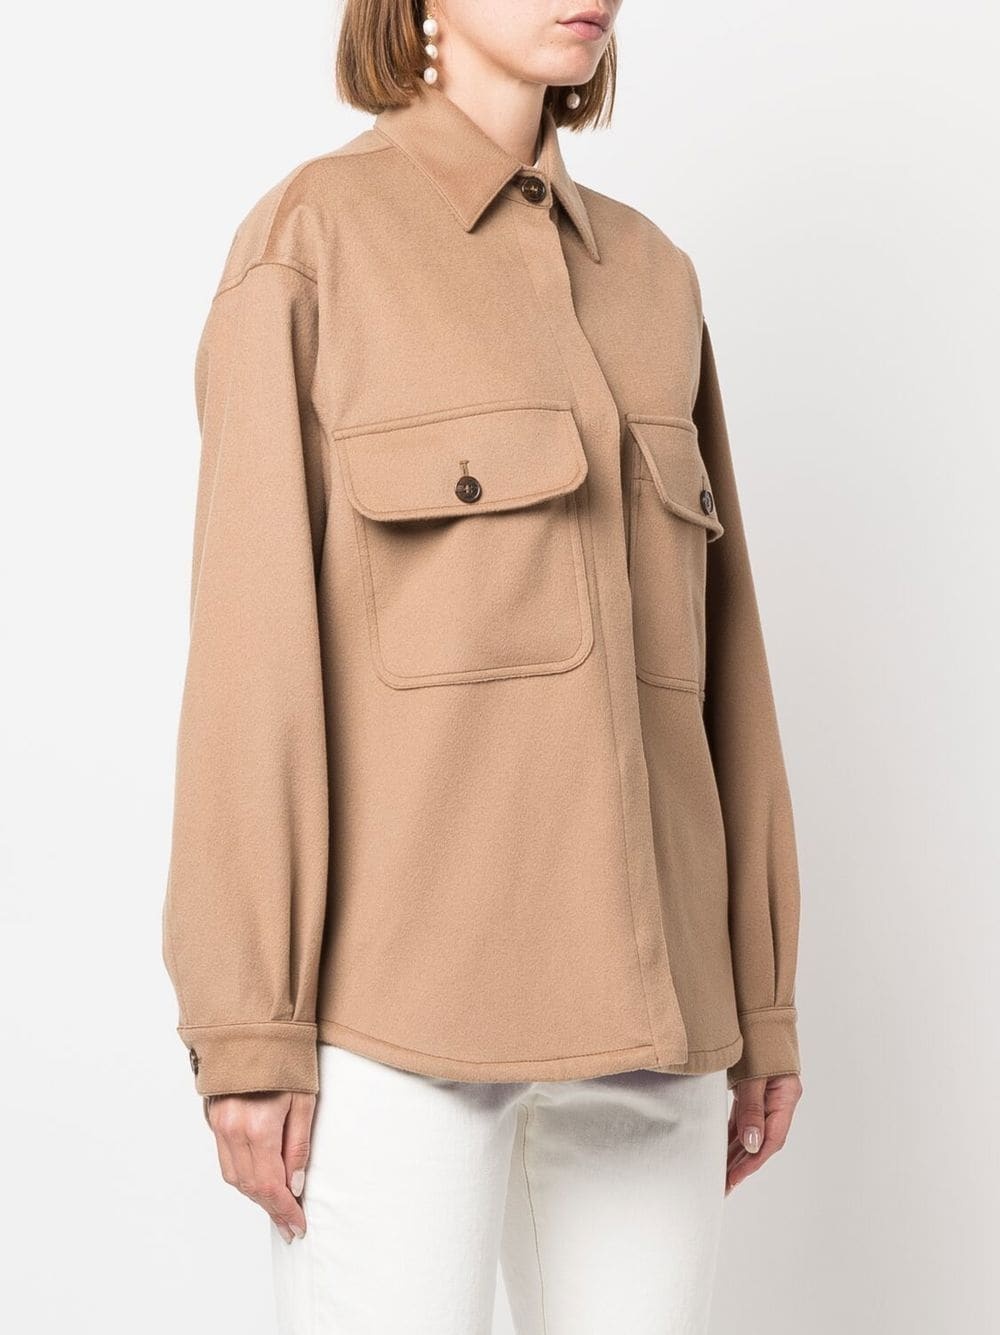 LORRIANE Light Camel Cotton Overshirt Jacket - 3